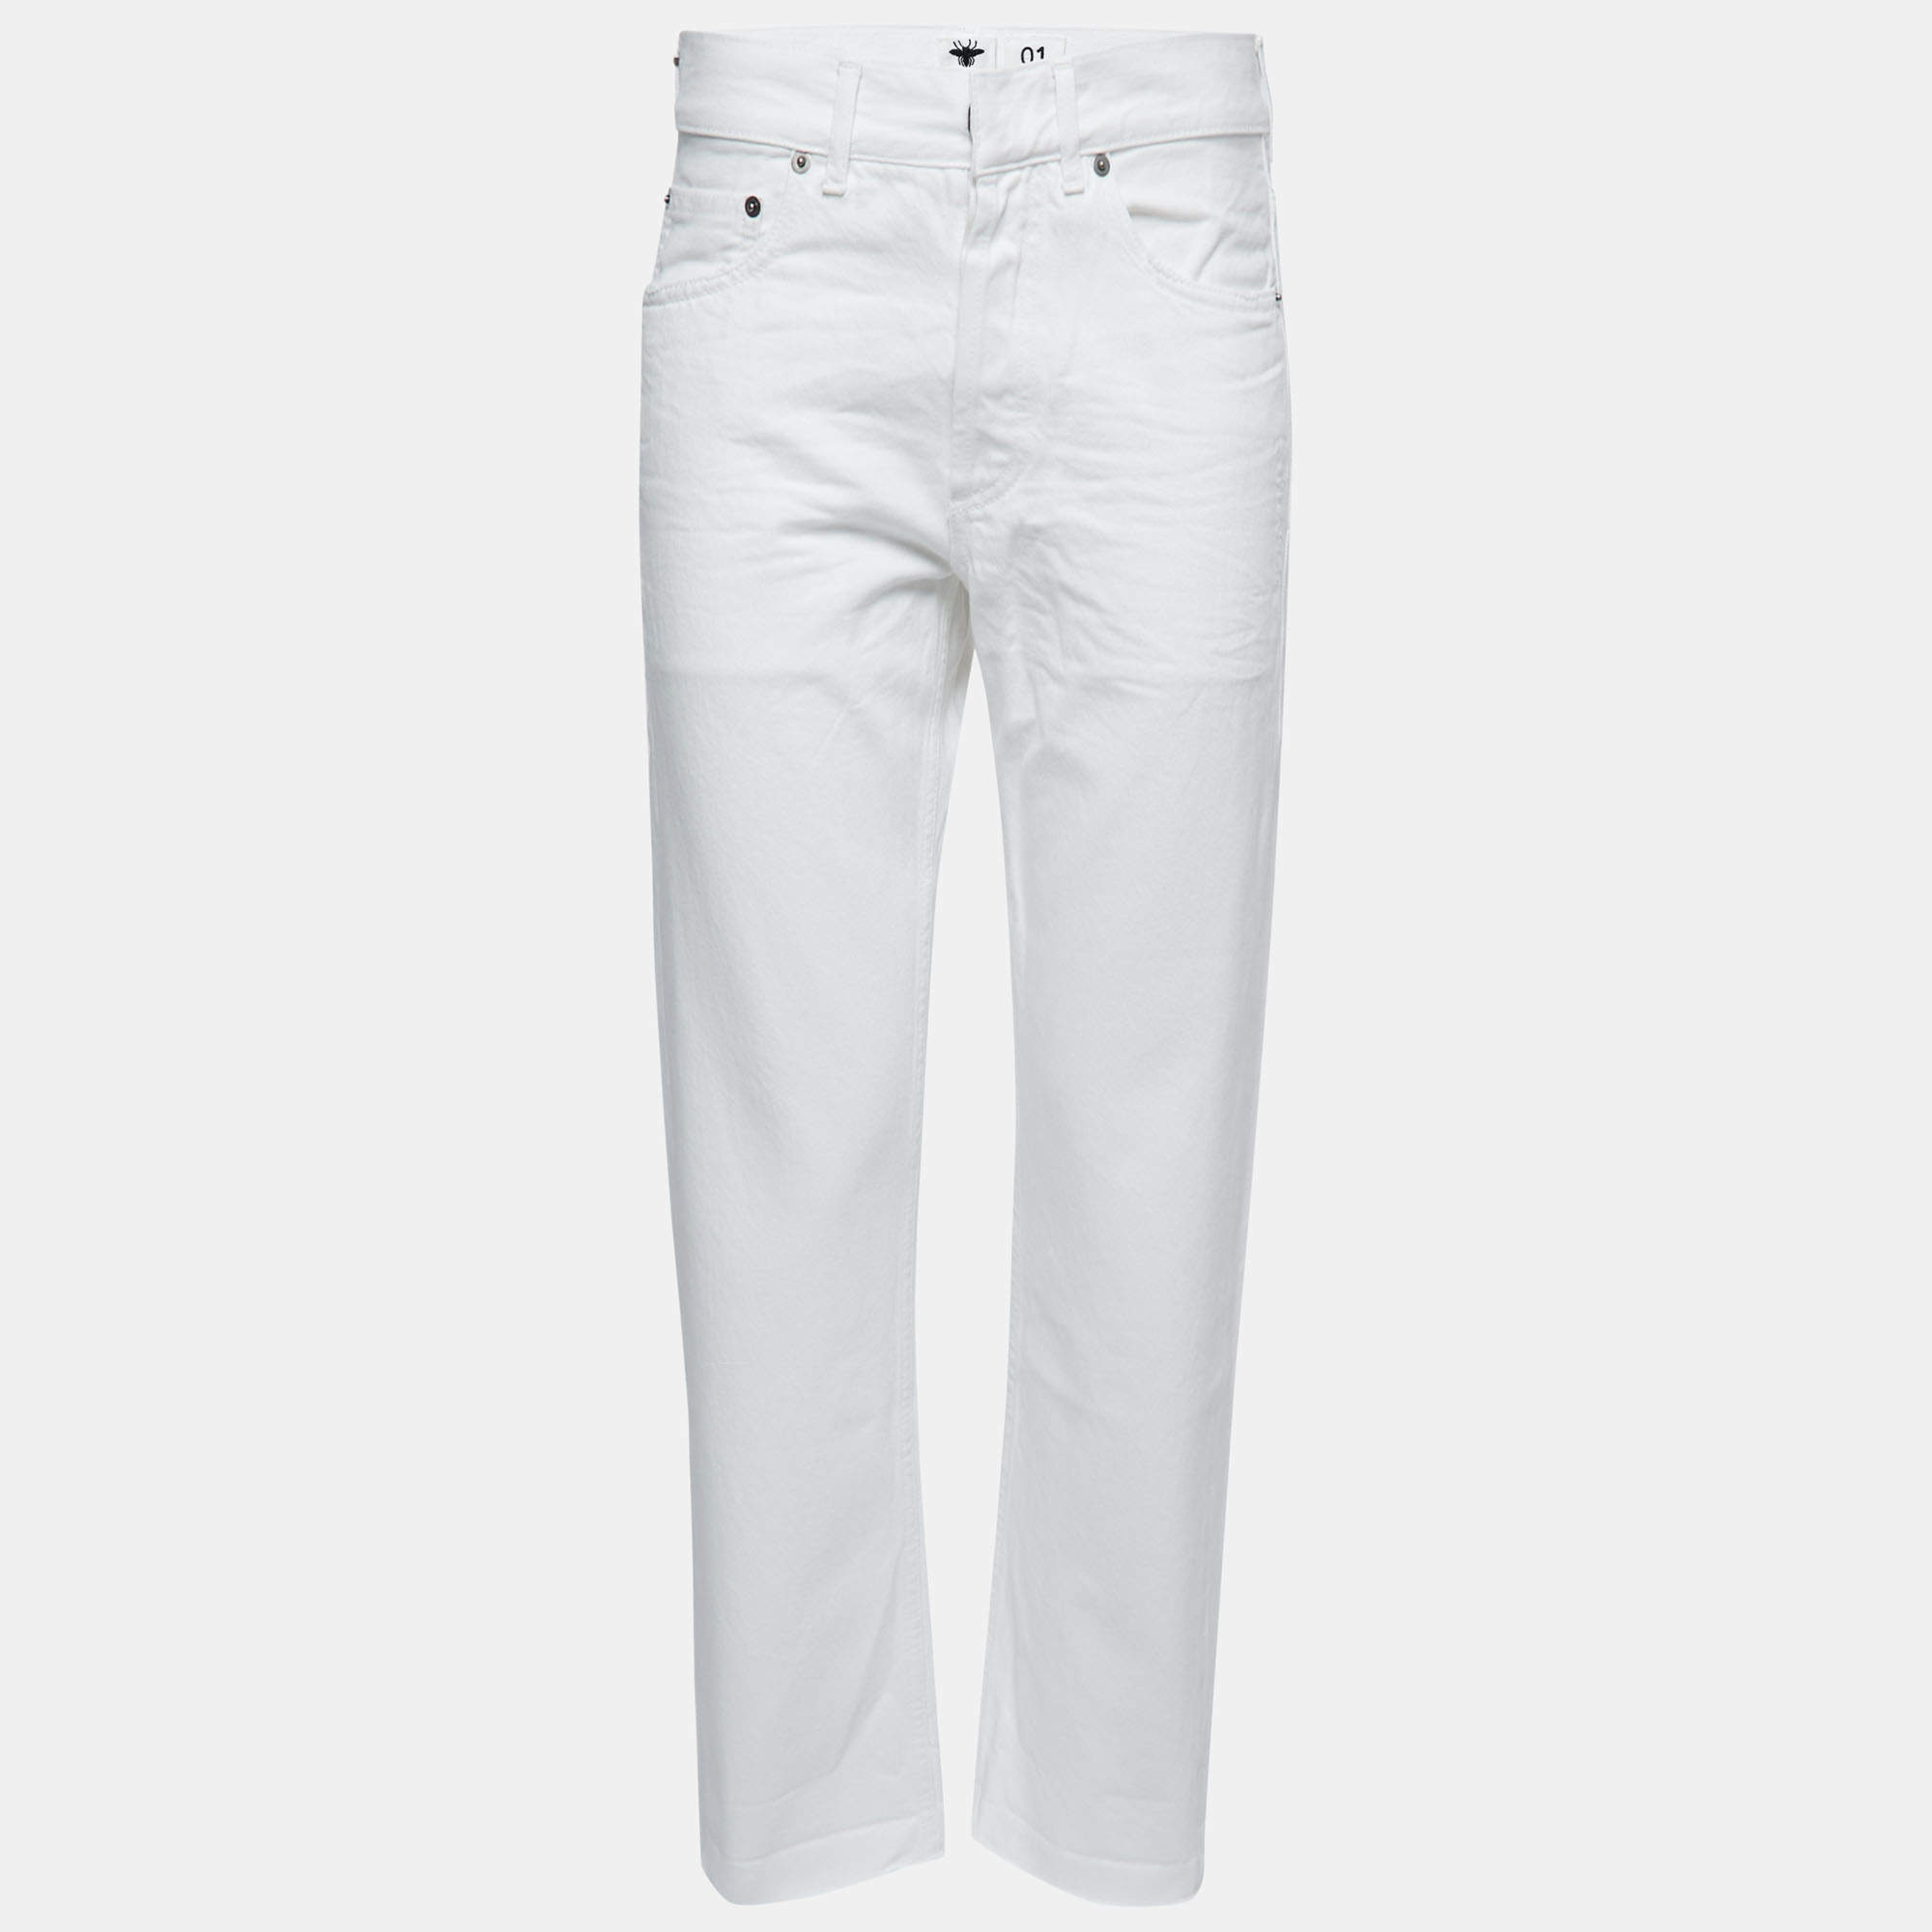 Christian Dior White Denim High Waist Jeans S Waist 29